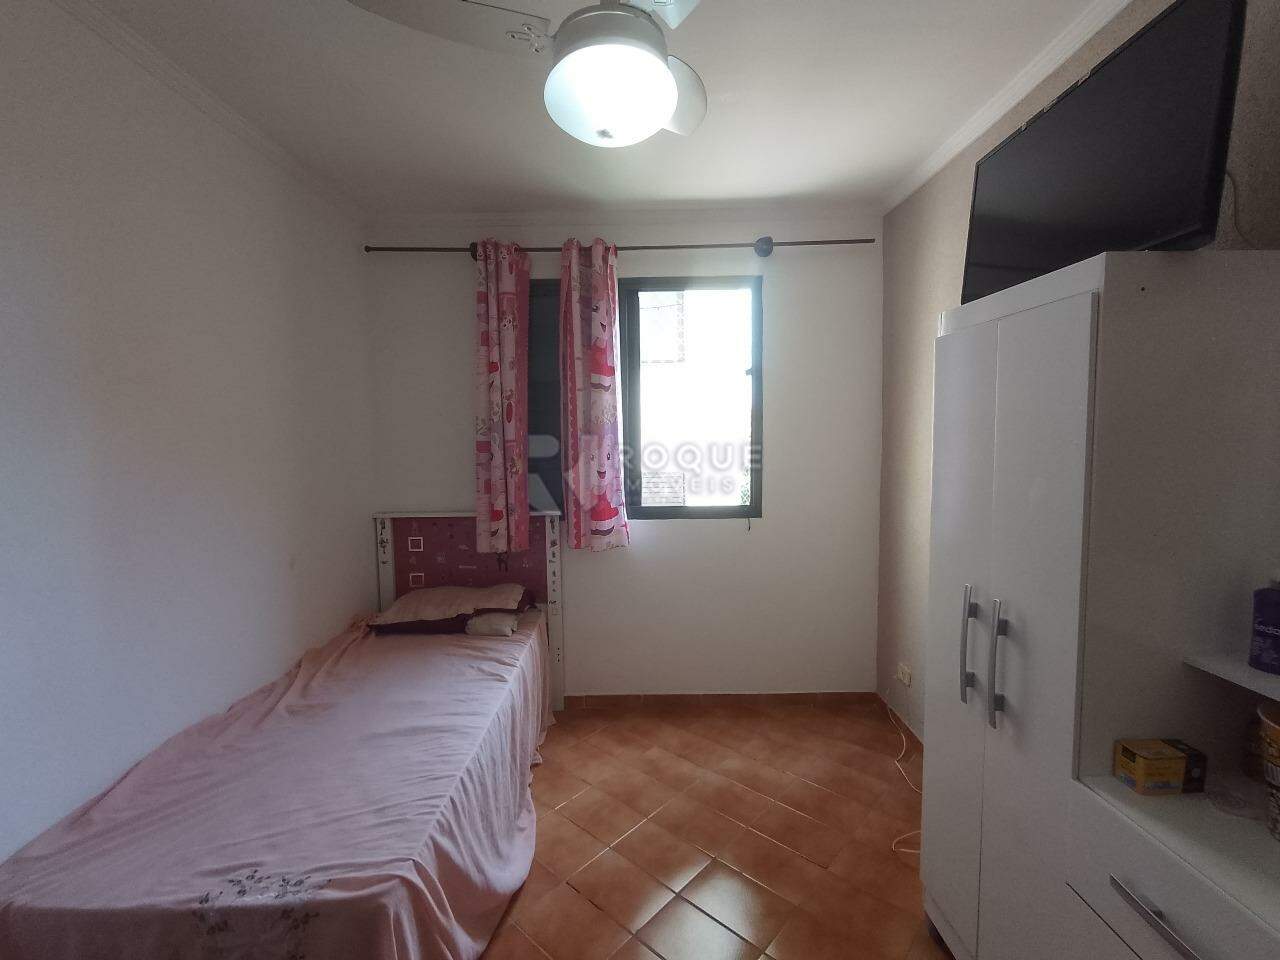 Apartamento para aluguel no bairro Jardim Ipiranga: Dormitório 2